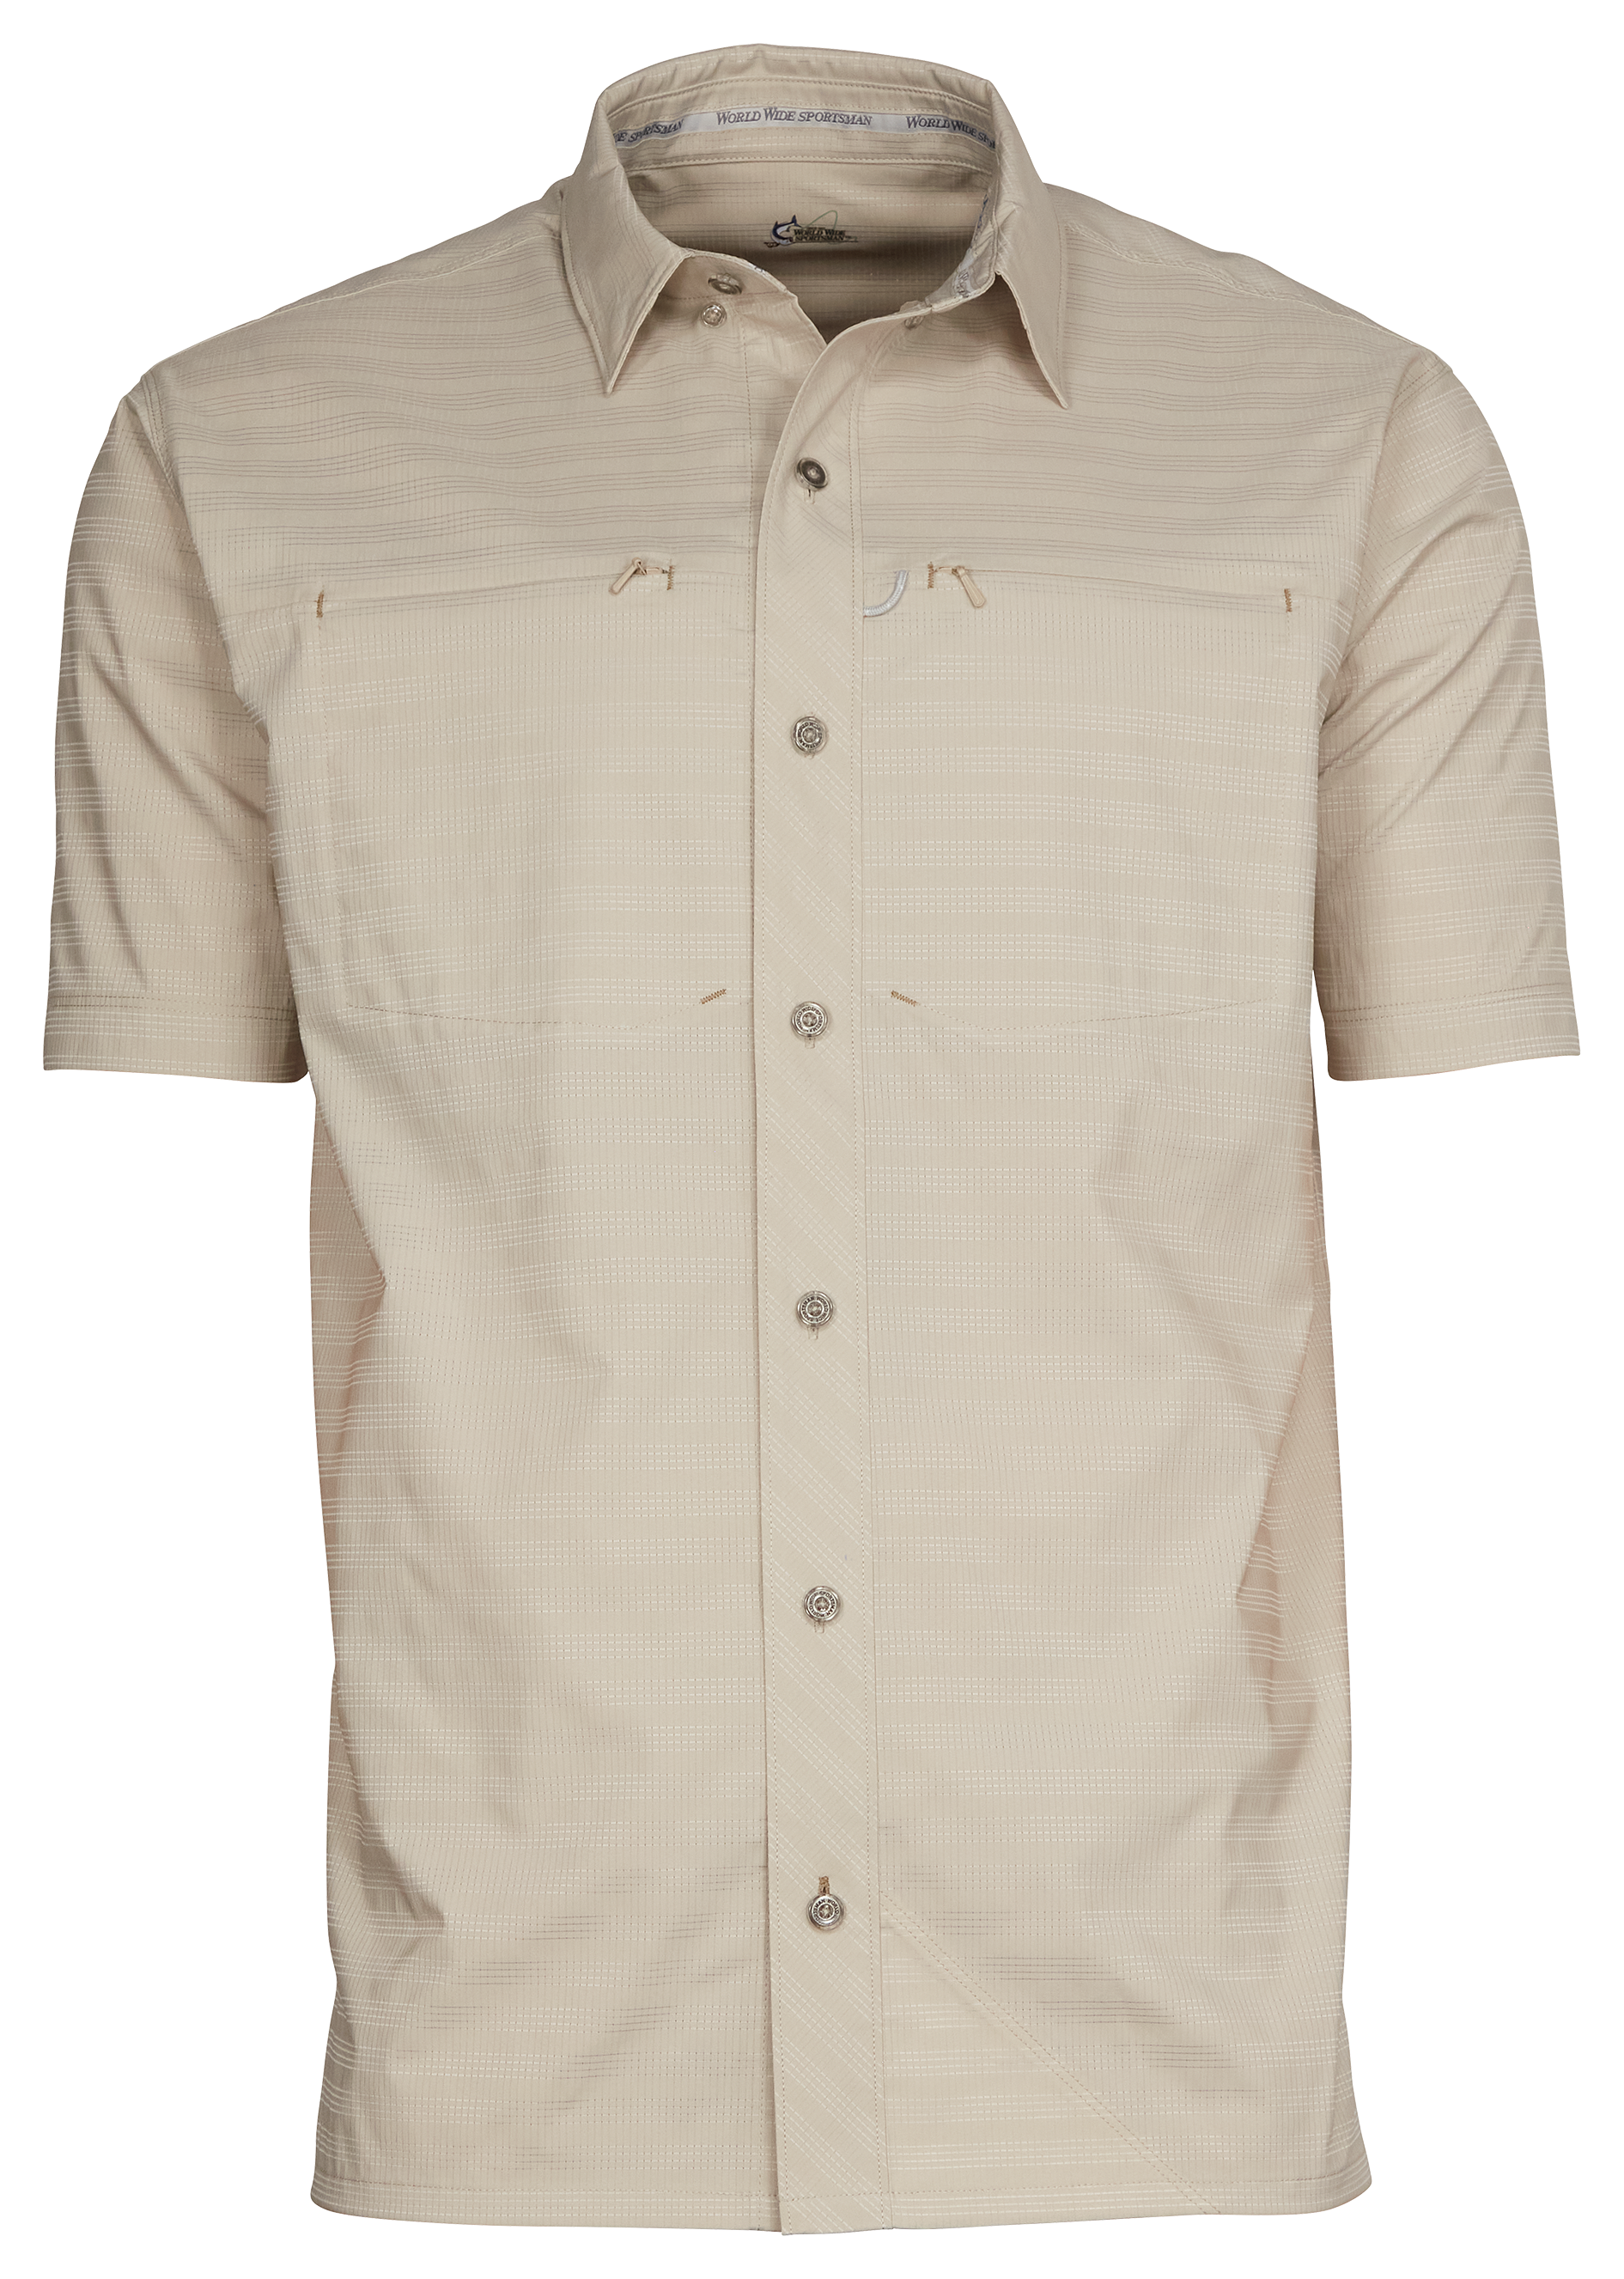 World Wide Sportsman Seacrest 2-Pocket Short-Sleeve Button-Down Shirt for Men - Peyote - 2XL